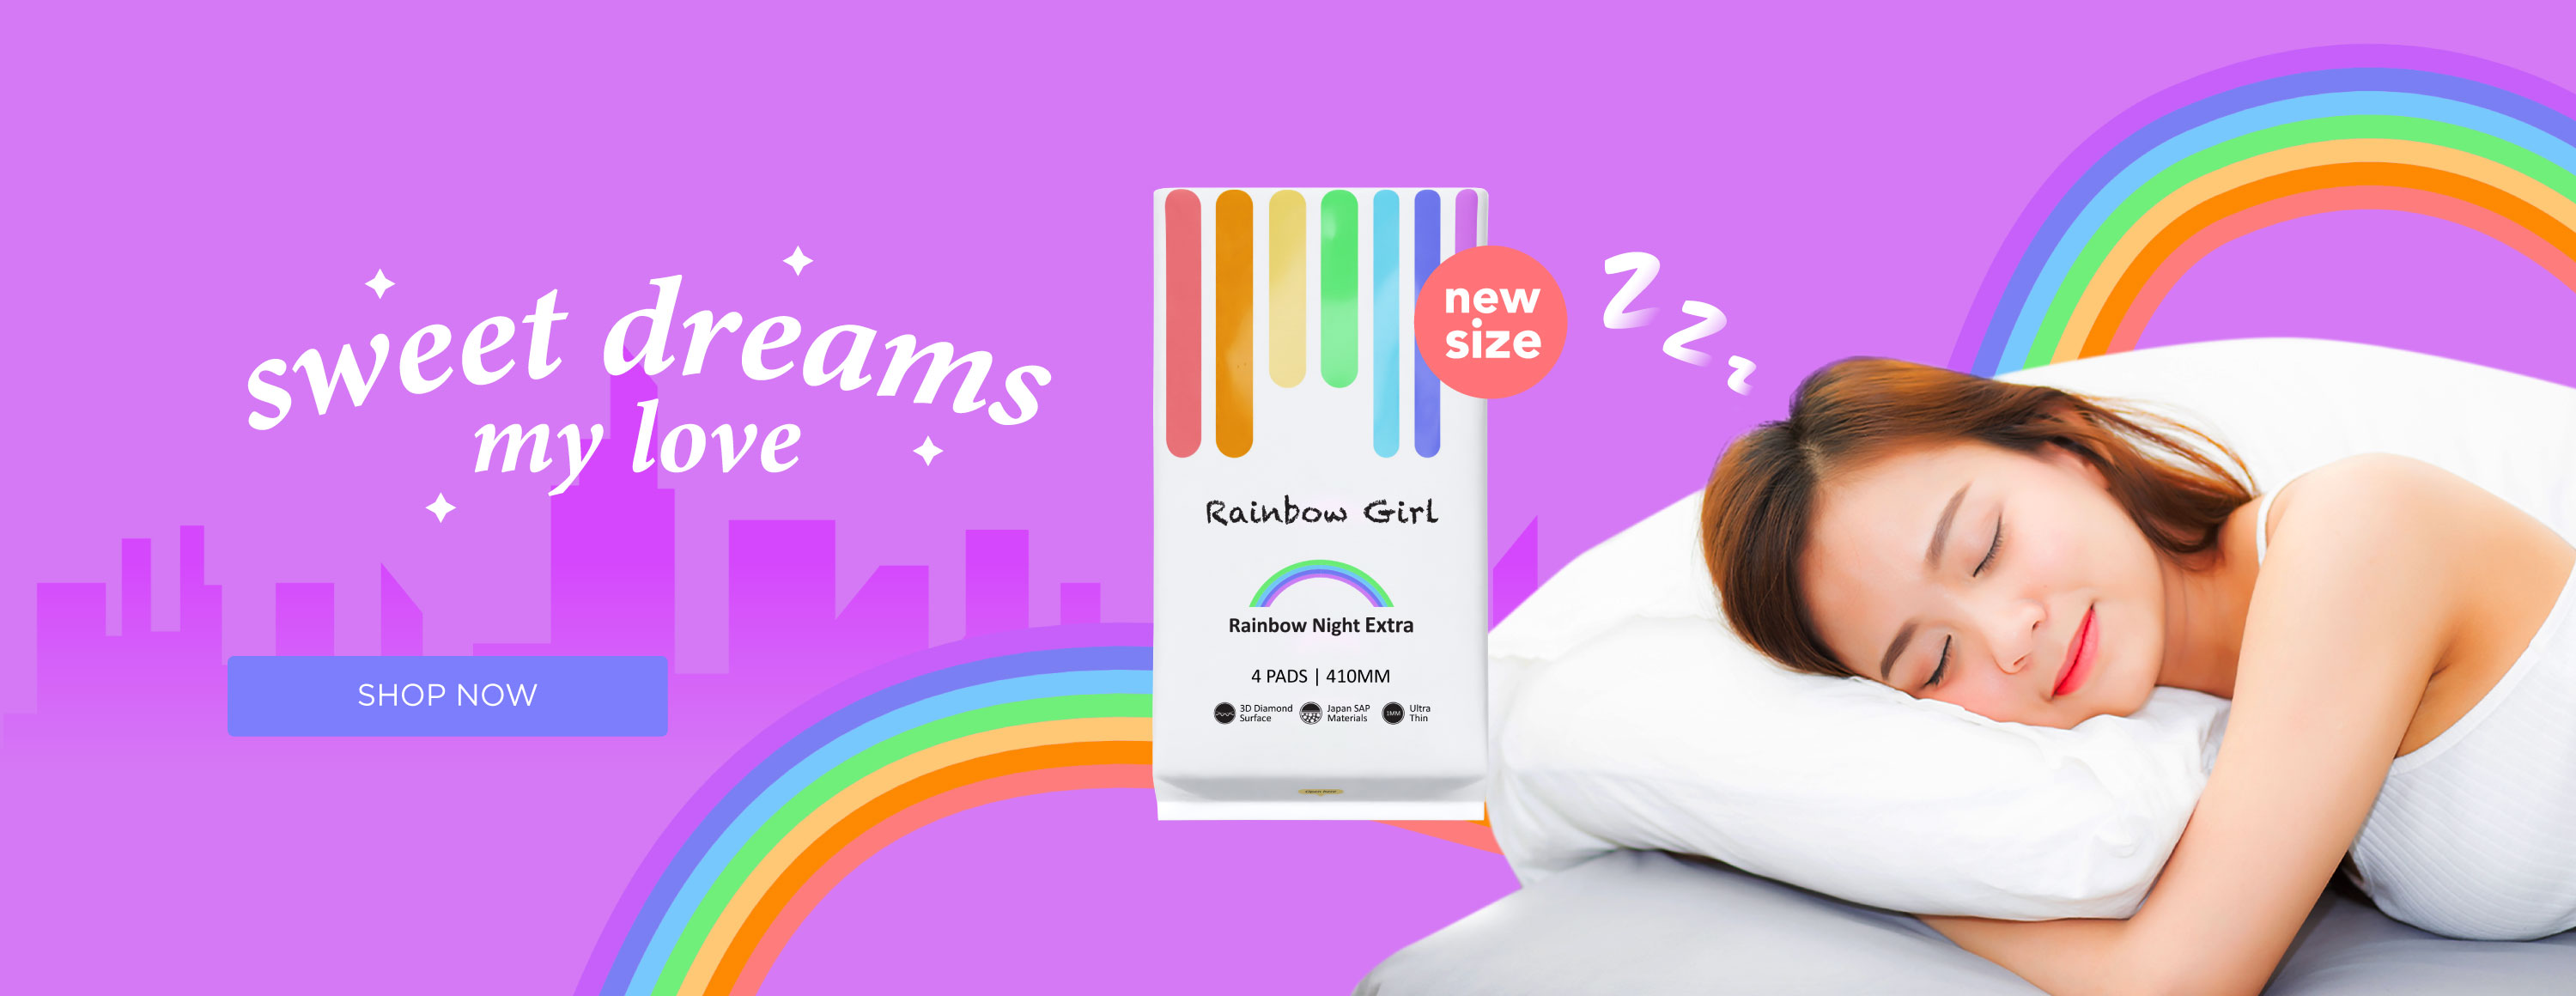 Rainbow Girl - Rainbow Night Extra